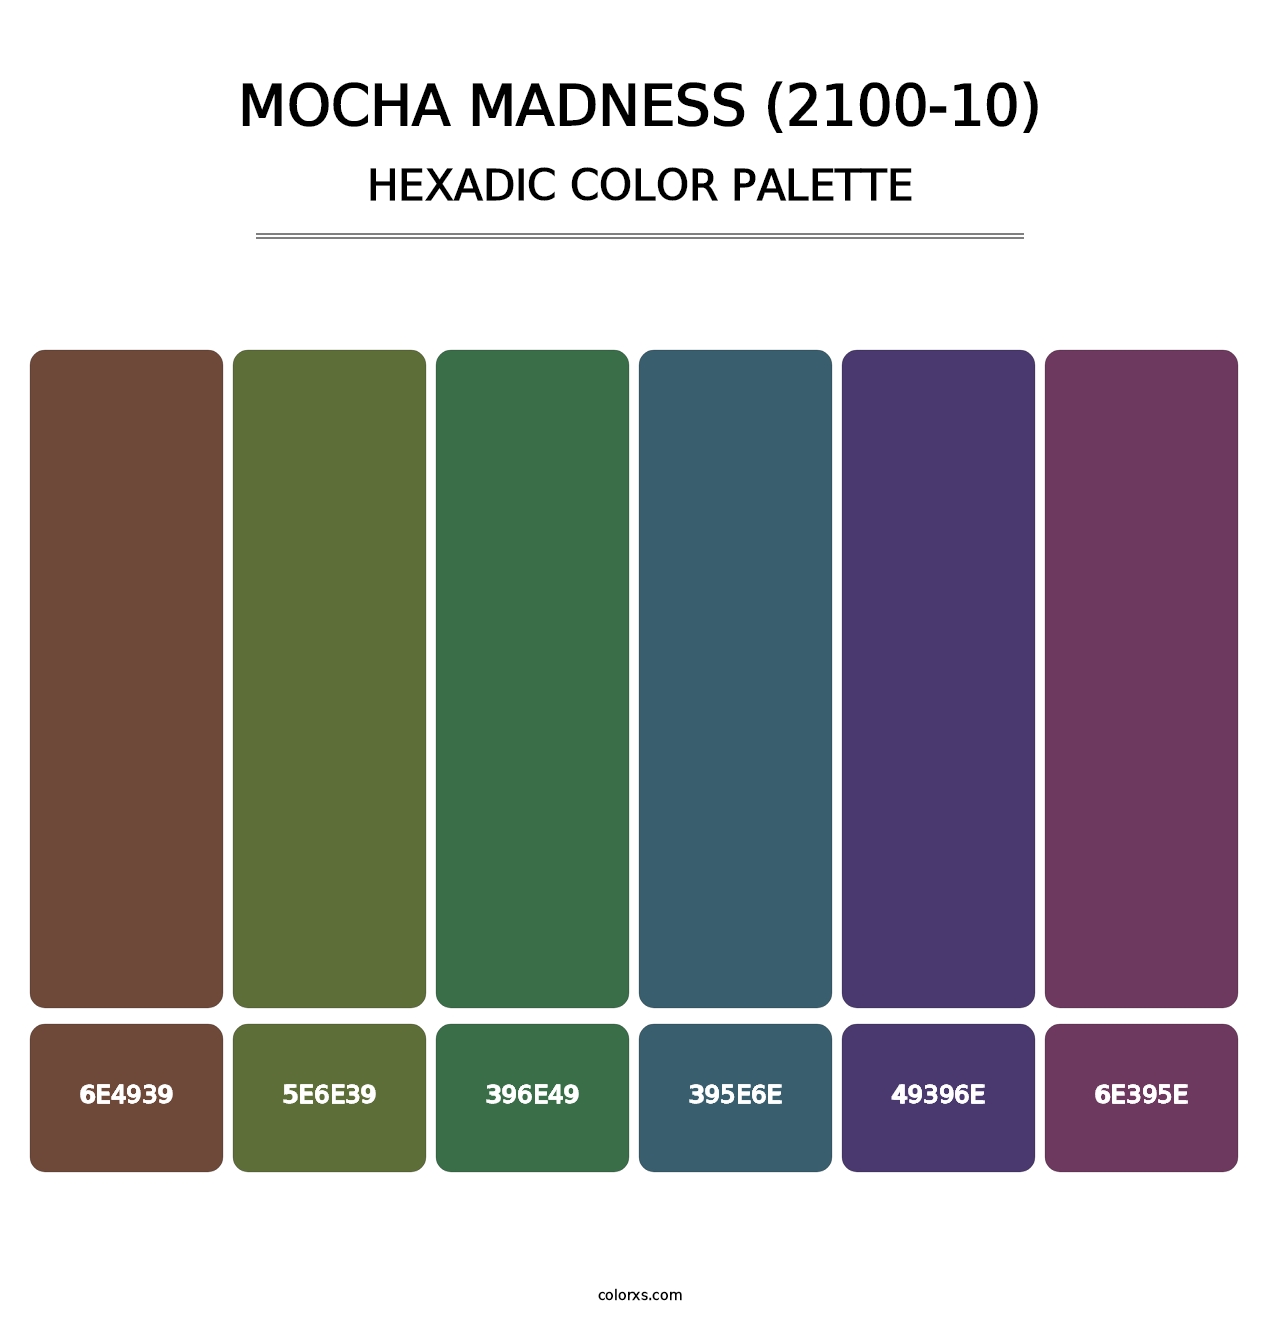 Mocha Madness (2100-10) - Hexadic Color Palette